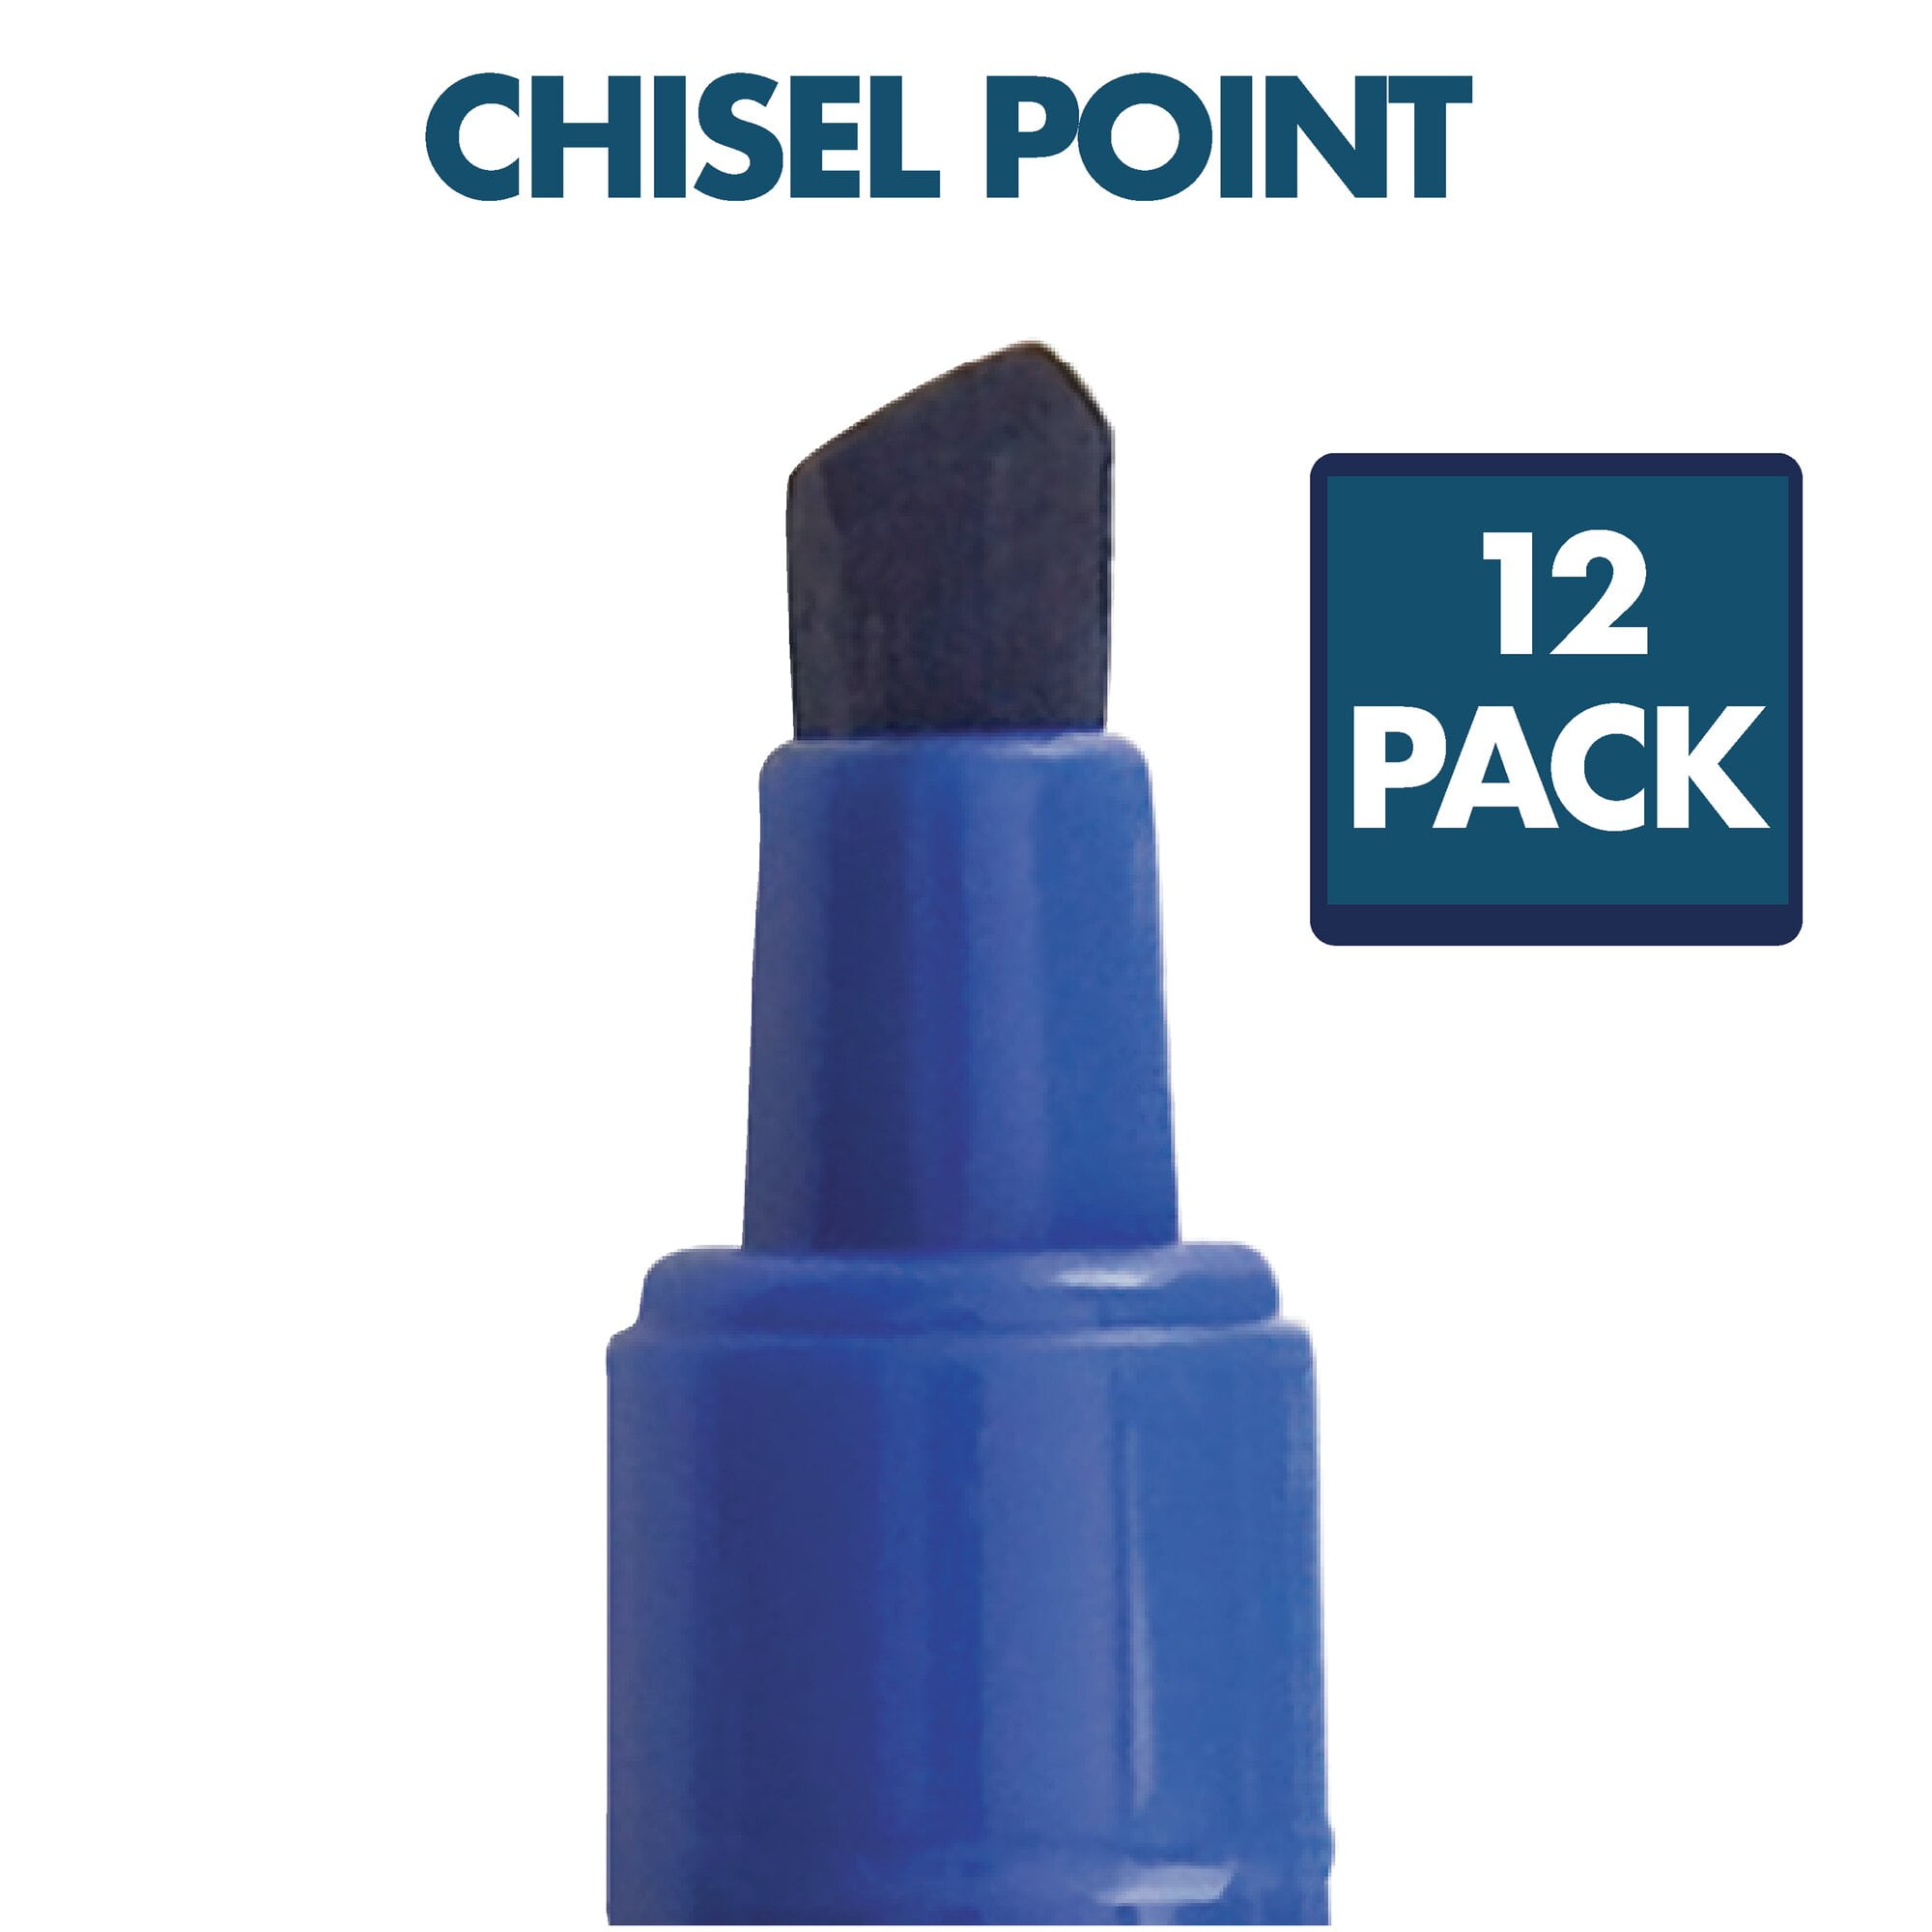 Quartet EnduraGlide Dry-Erase Markers, Chisel Point, Assorted Colors - 4 pack